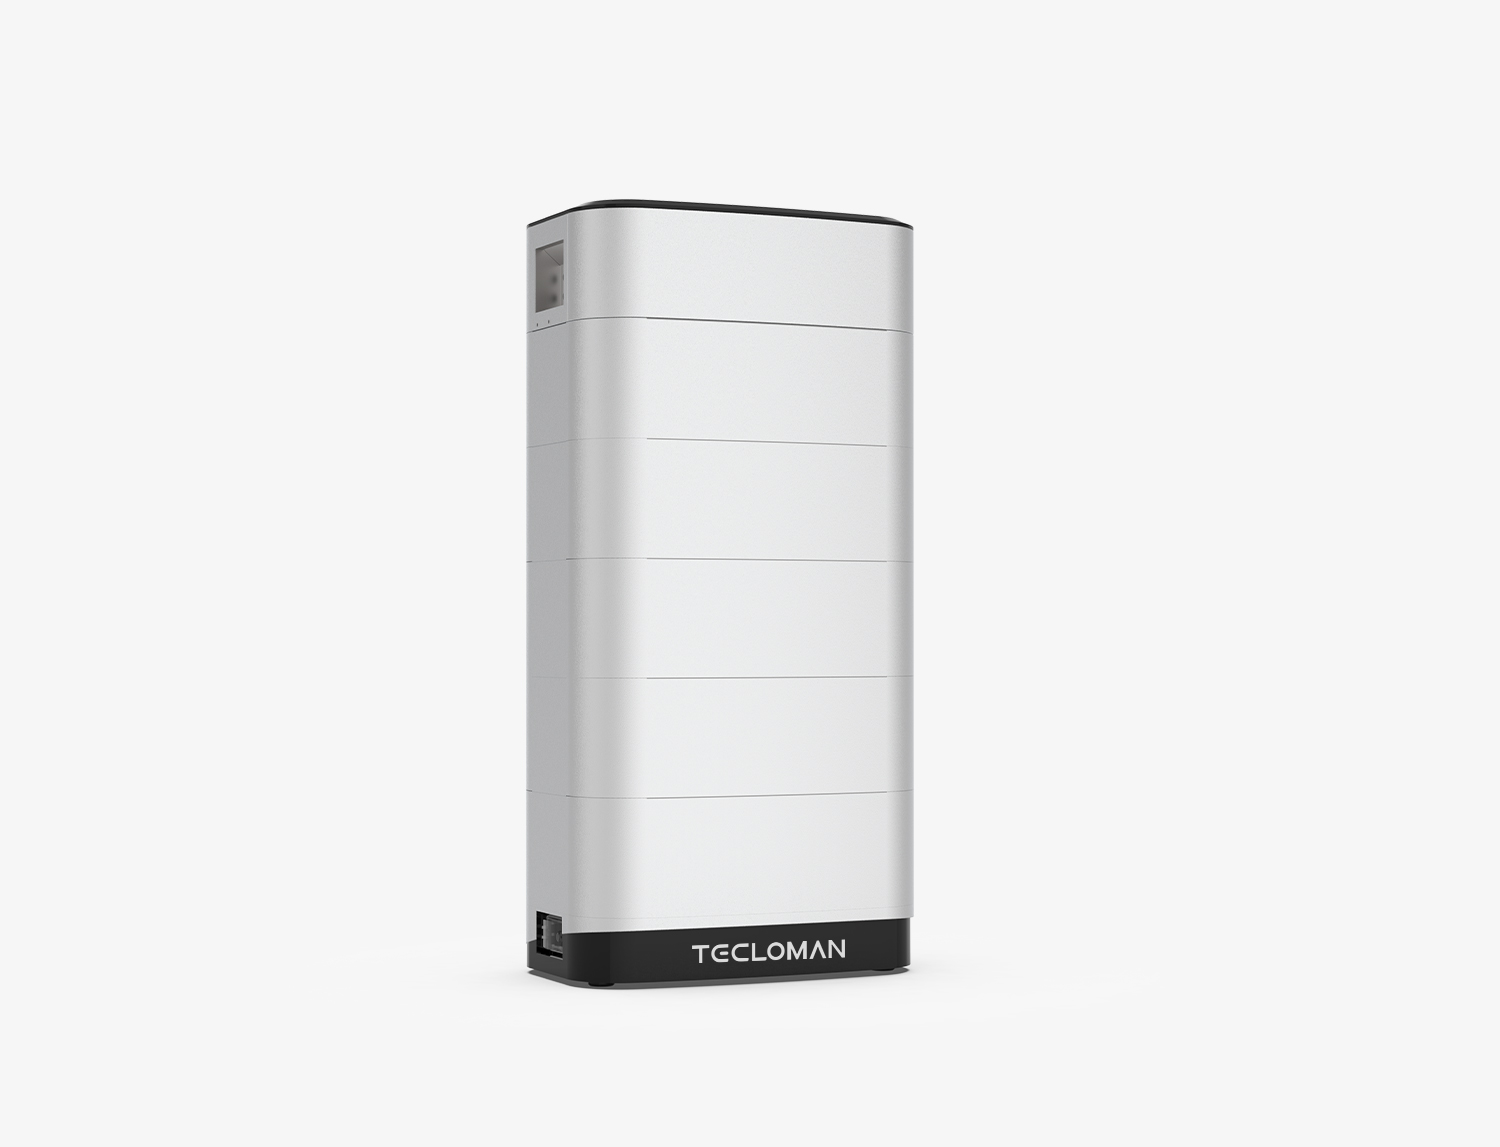 Tecloman home energy storage battery